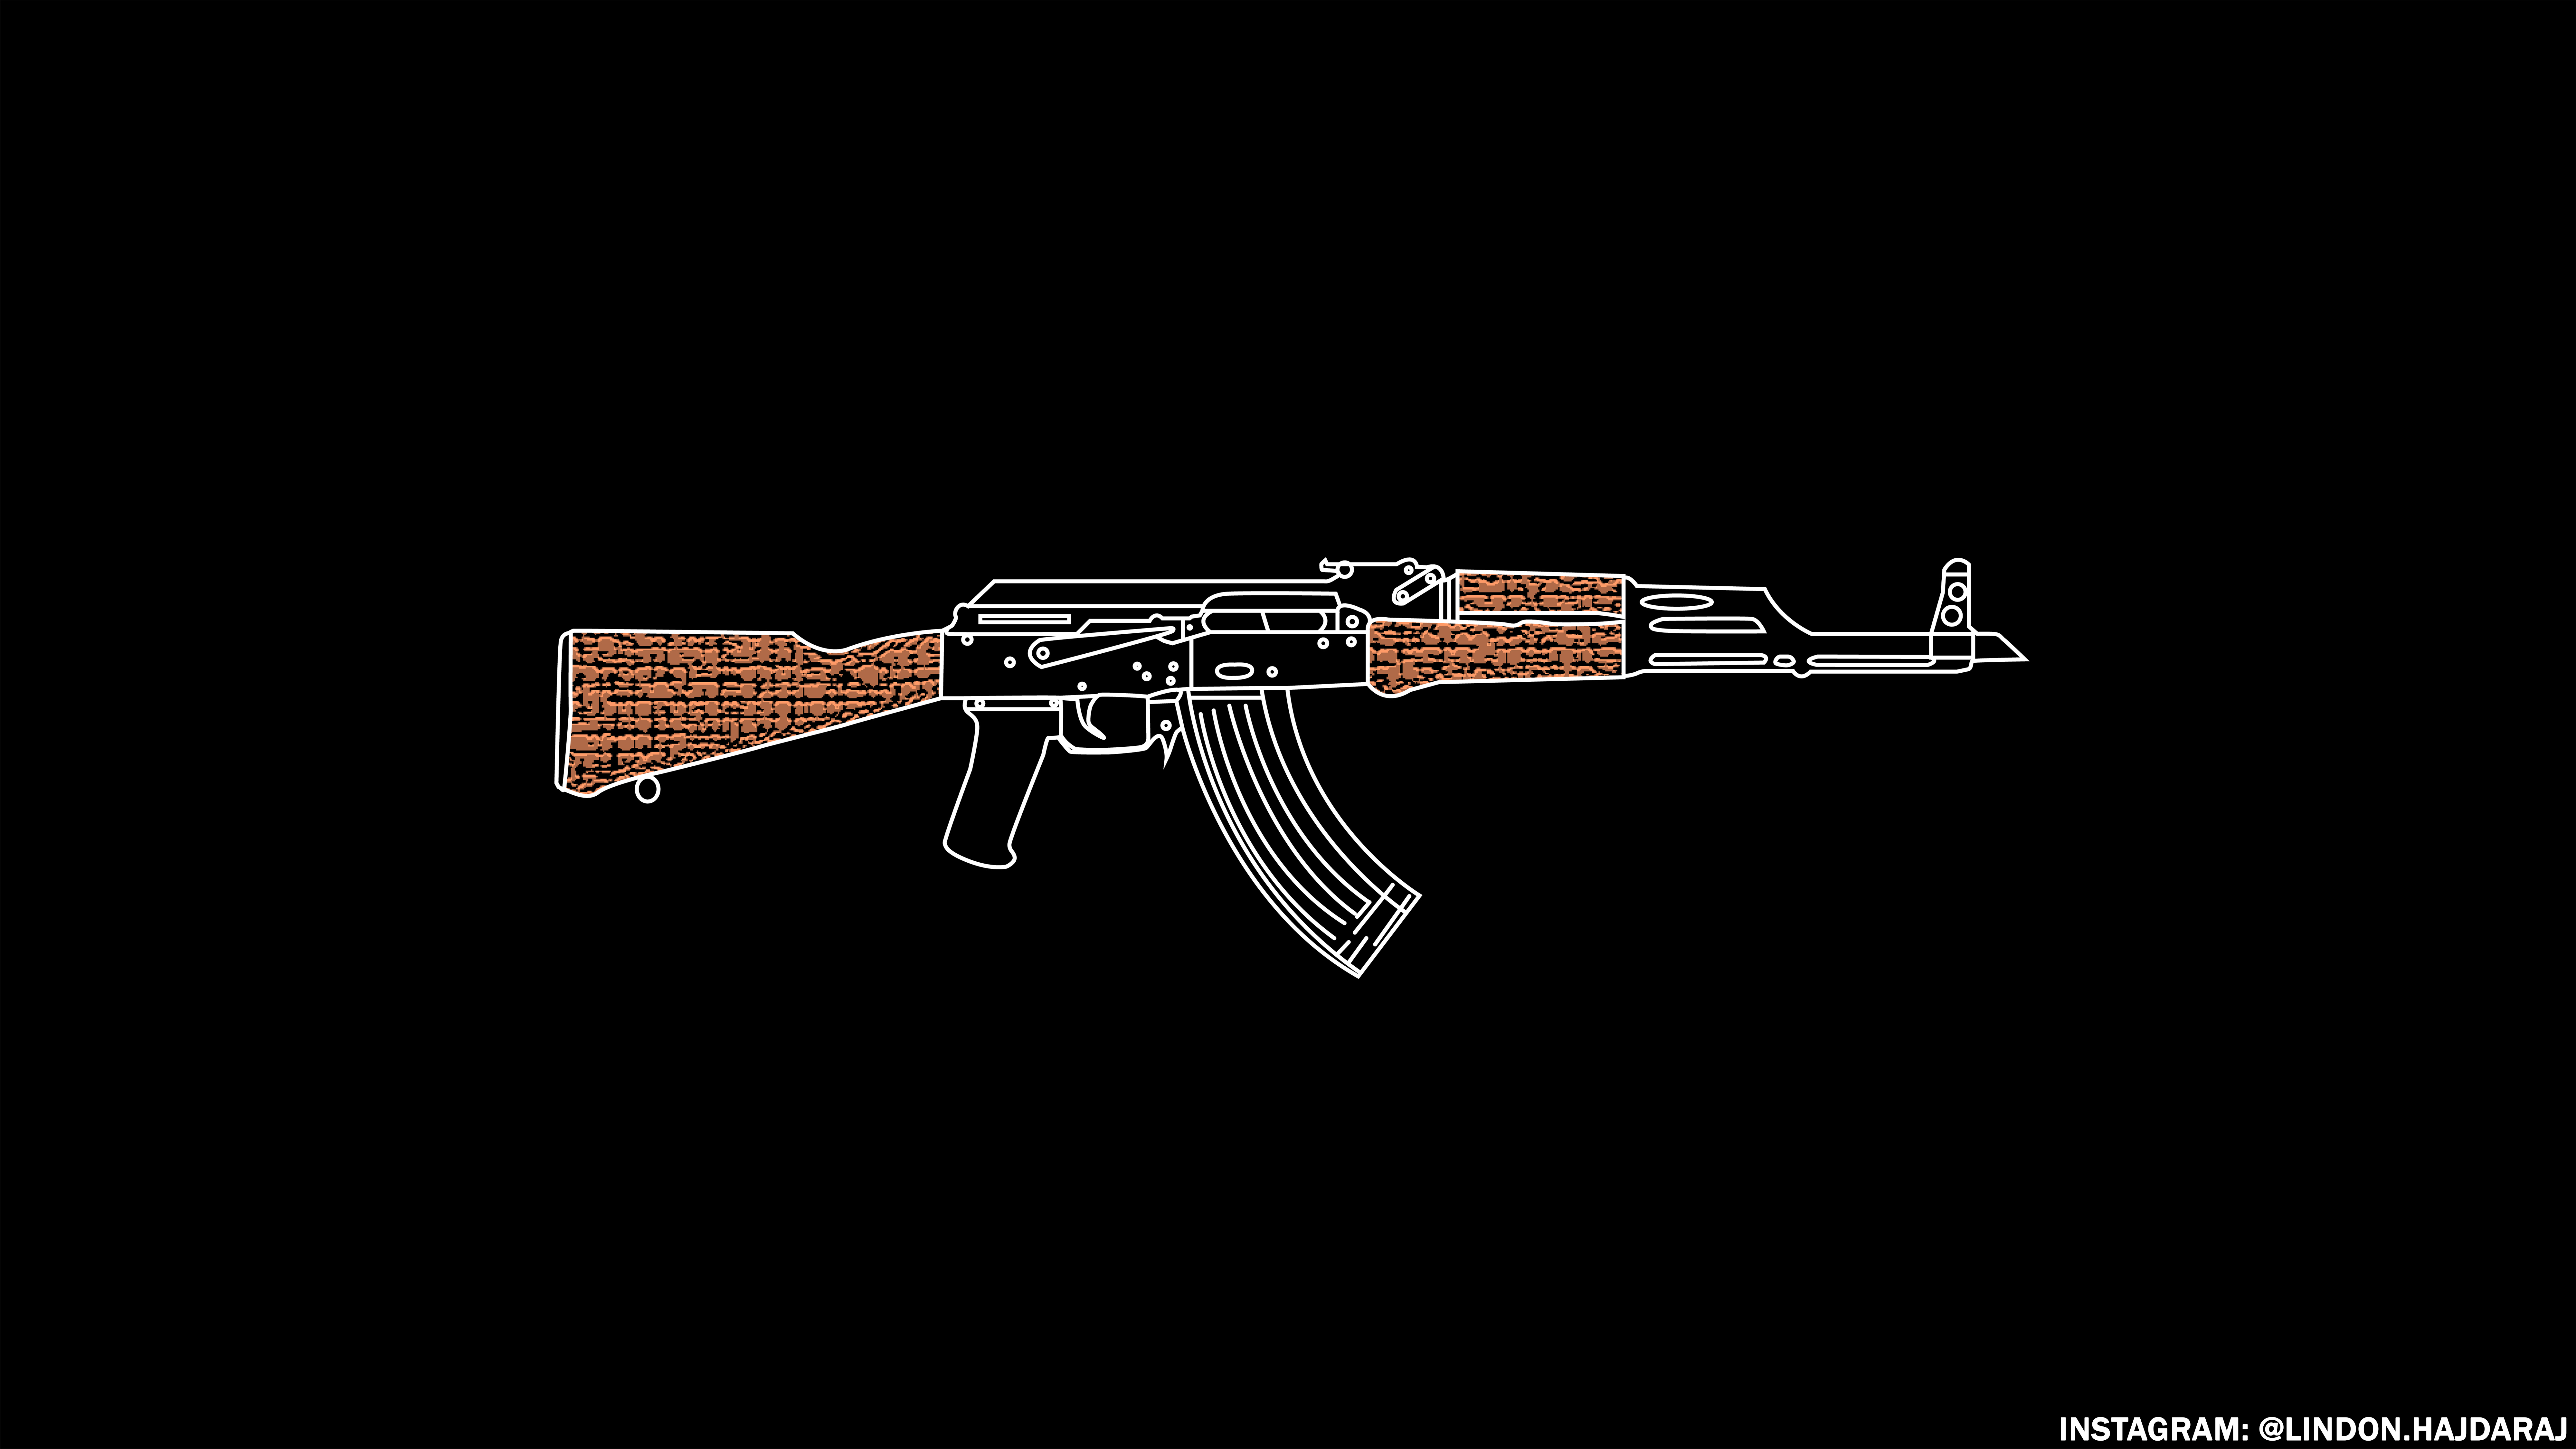 General 8000x4500 weapon AKM assault rifle Russian/Soviet firearms